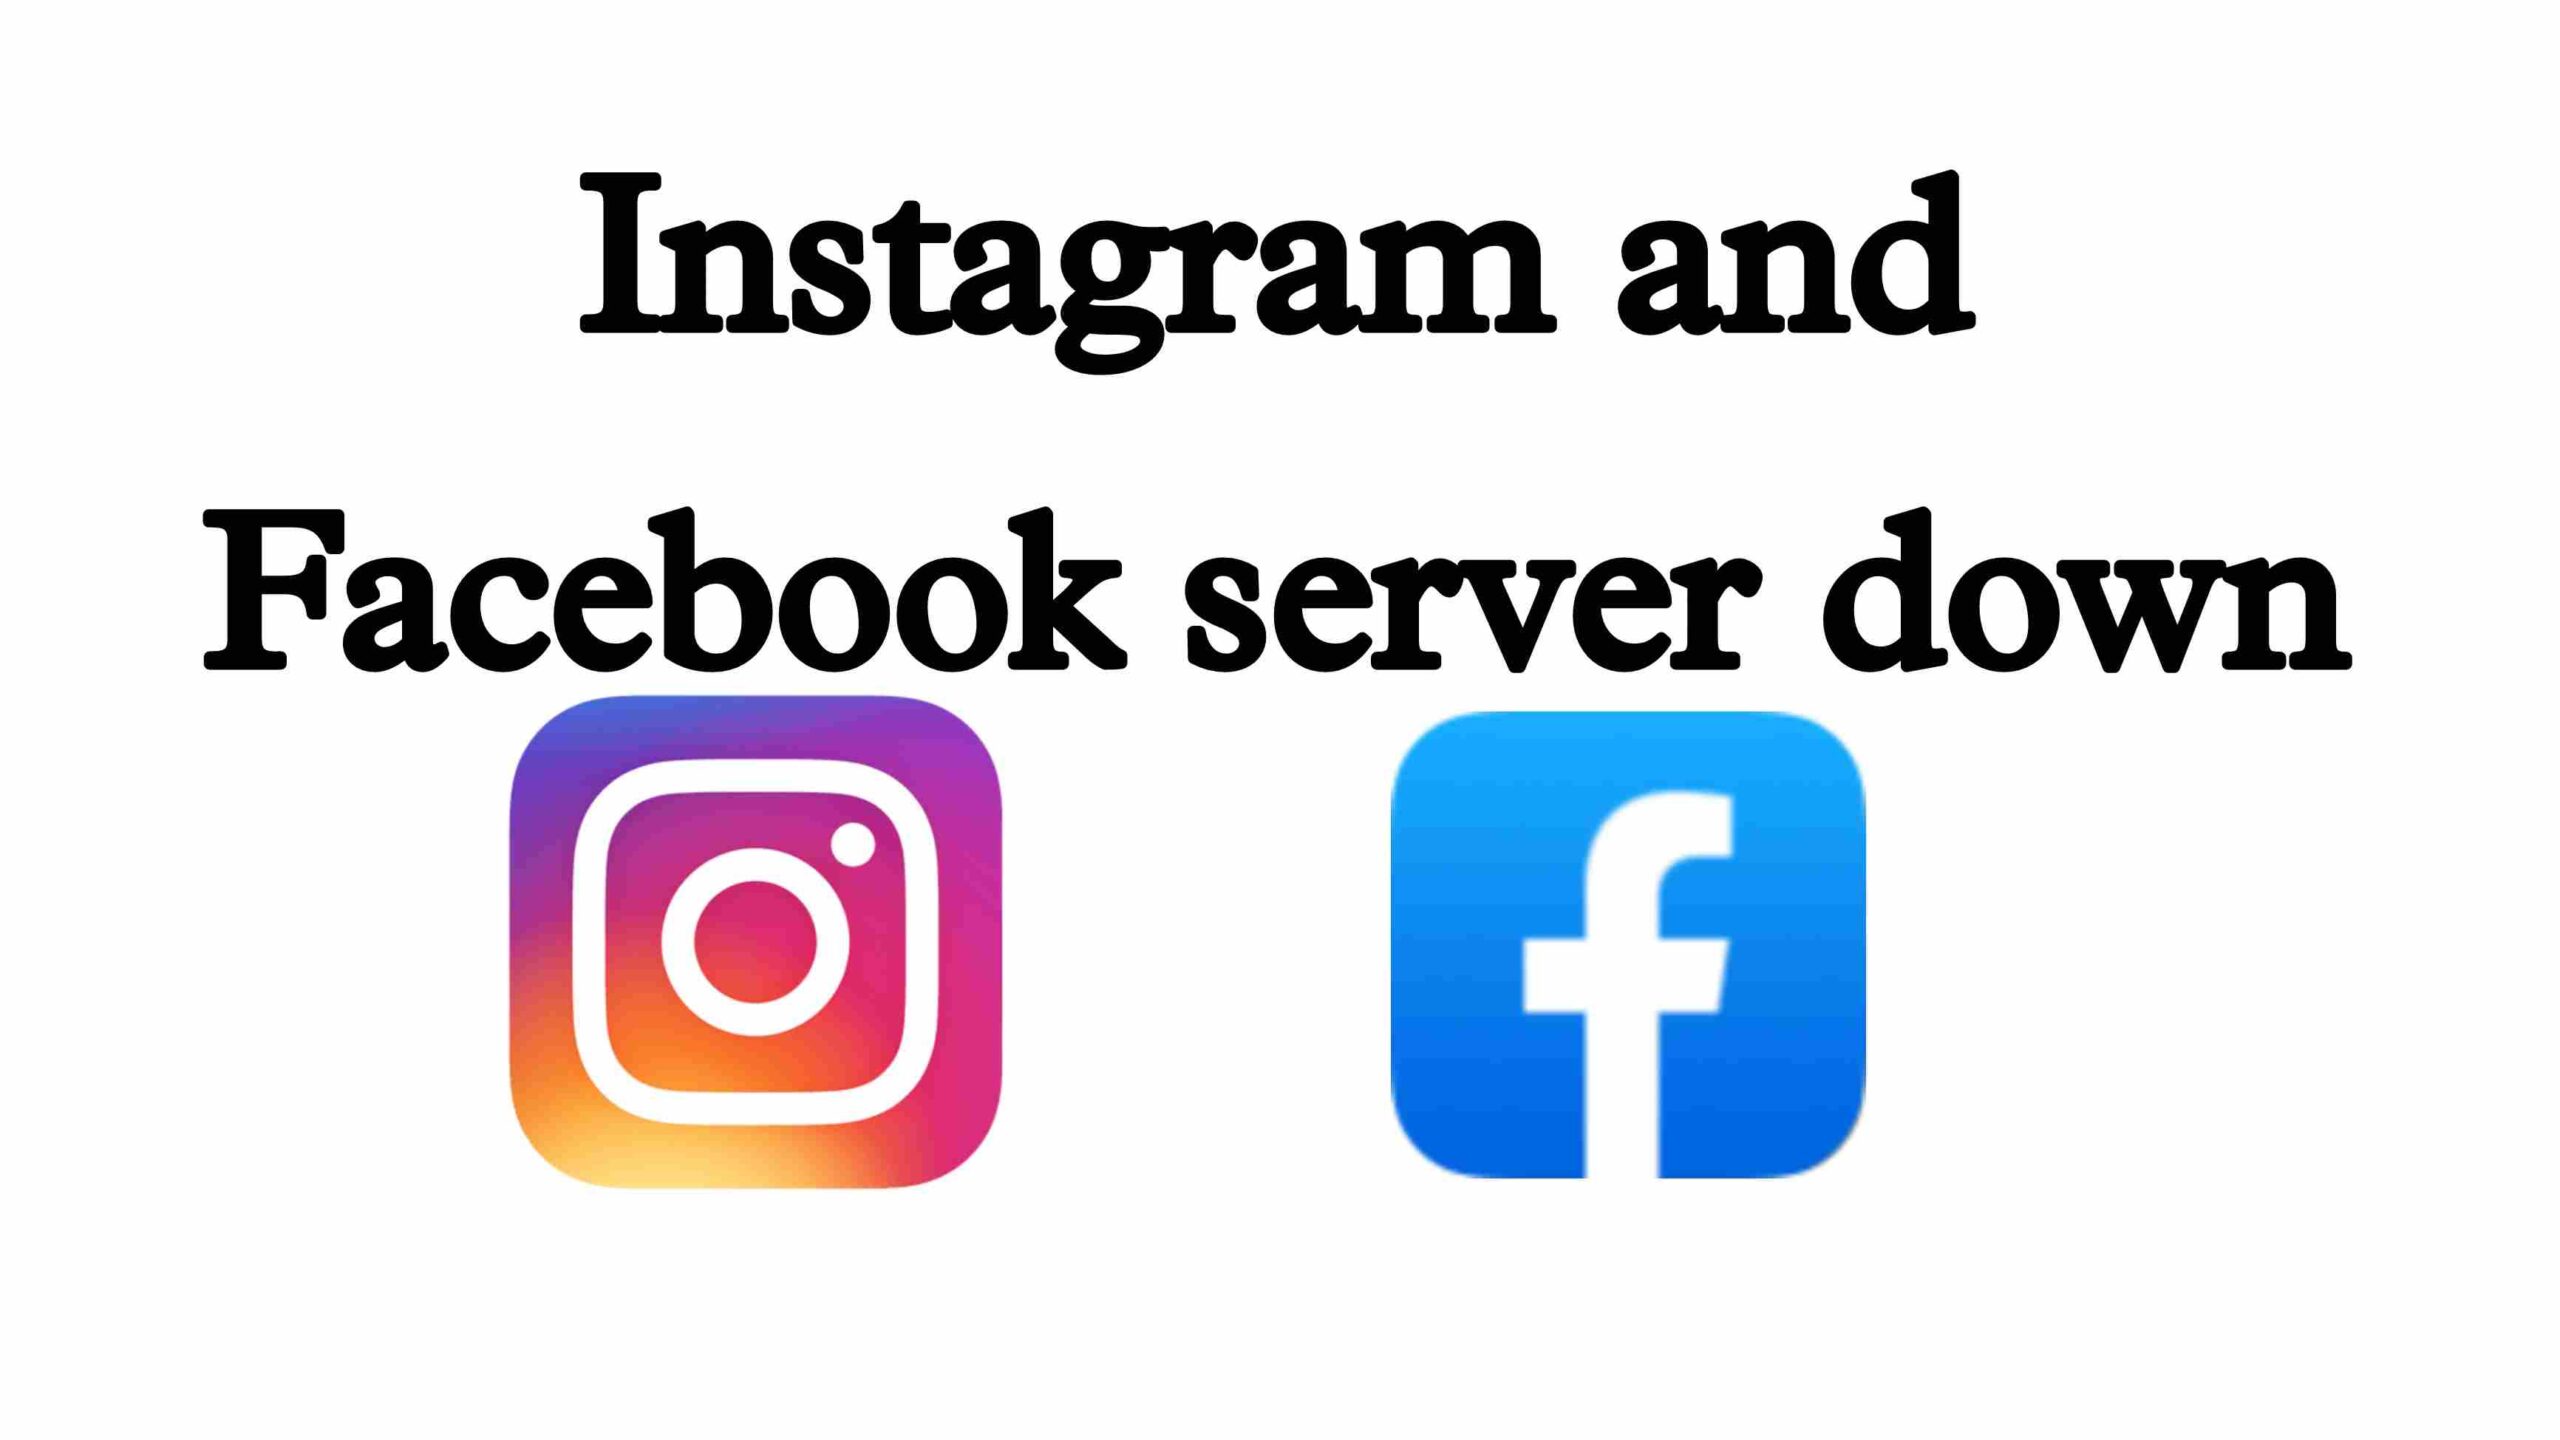 Instagram and Facebook server down